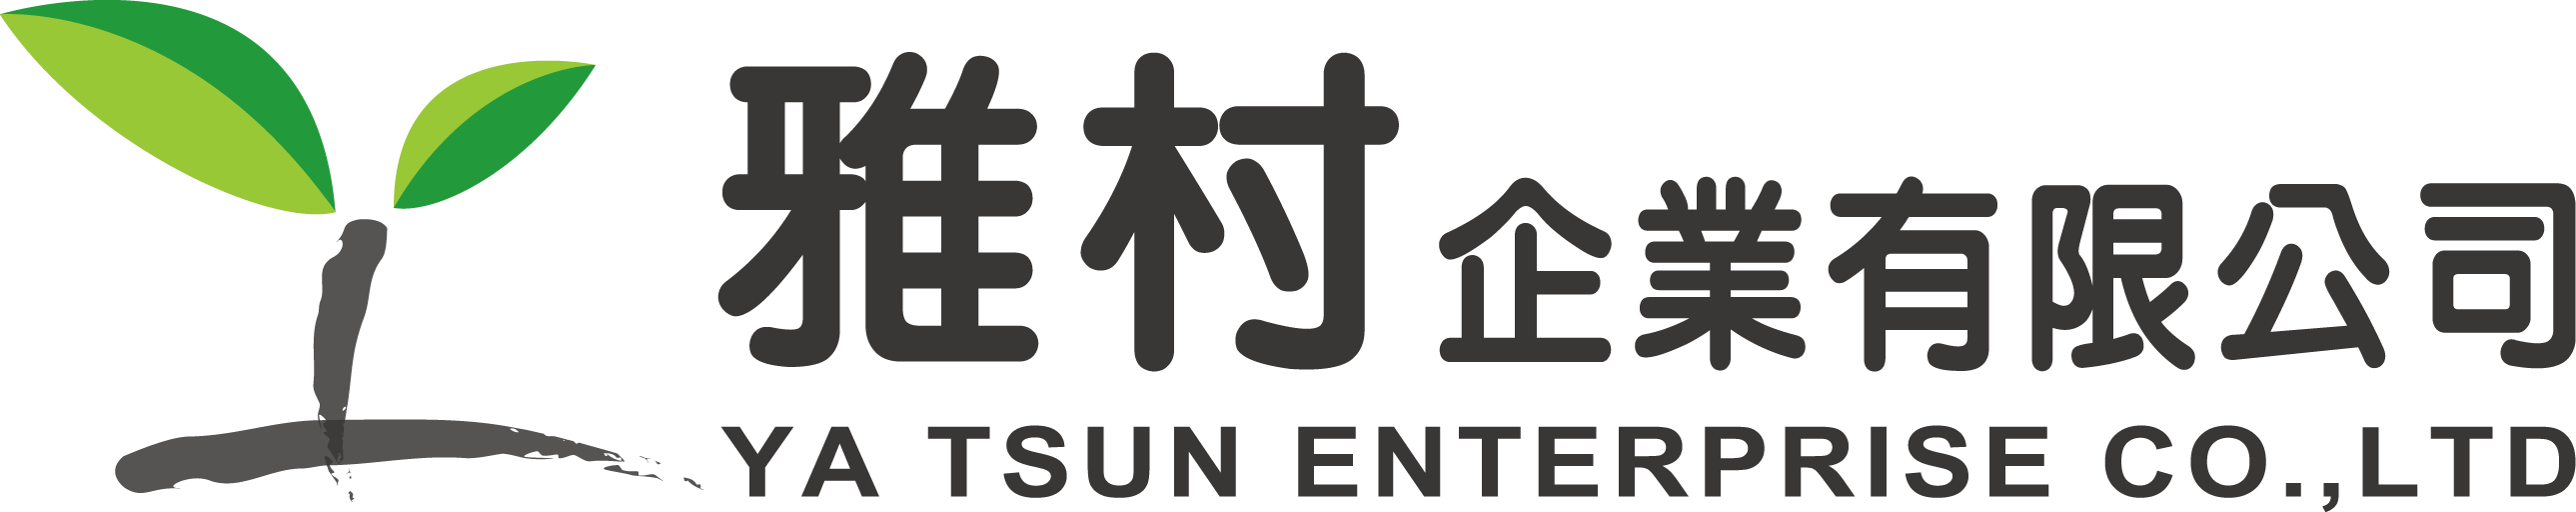 yatsun_logo.png